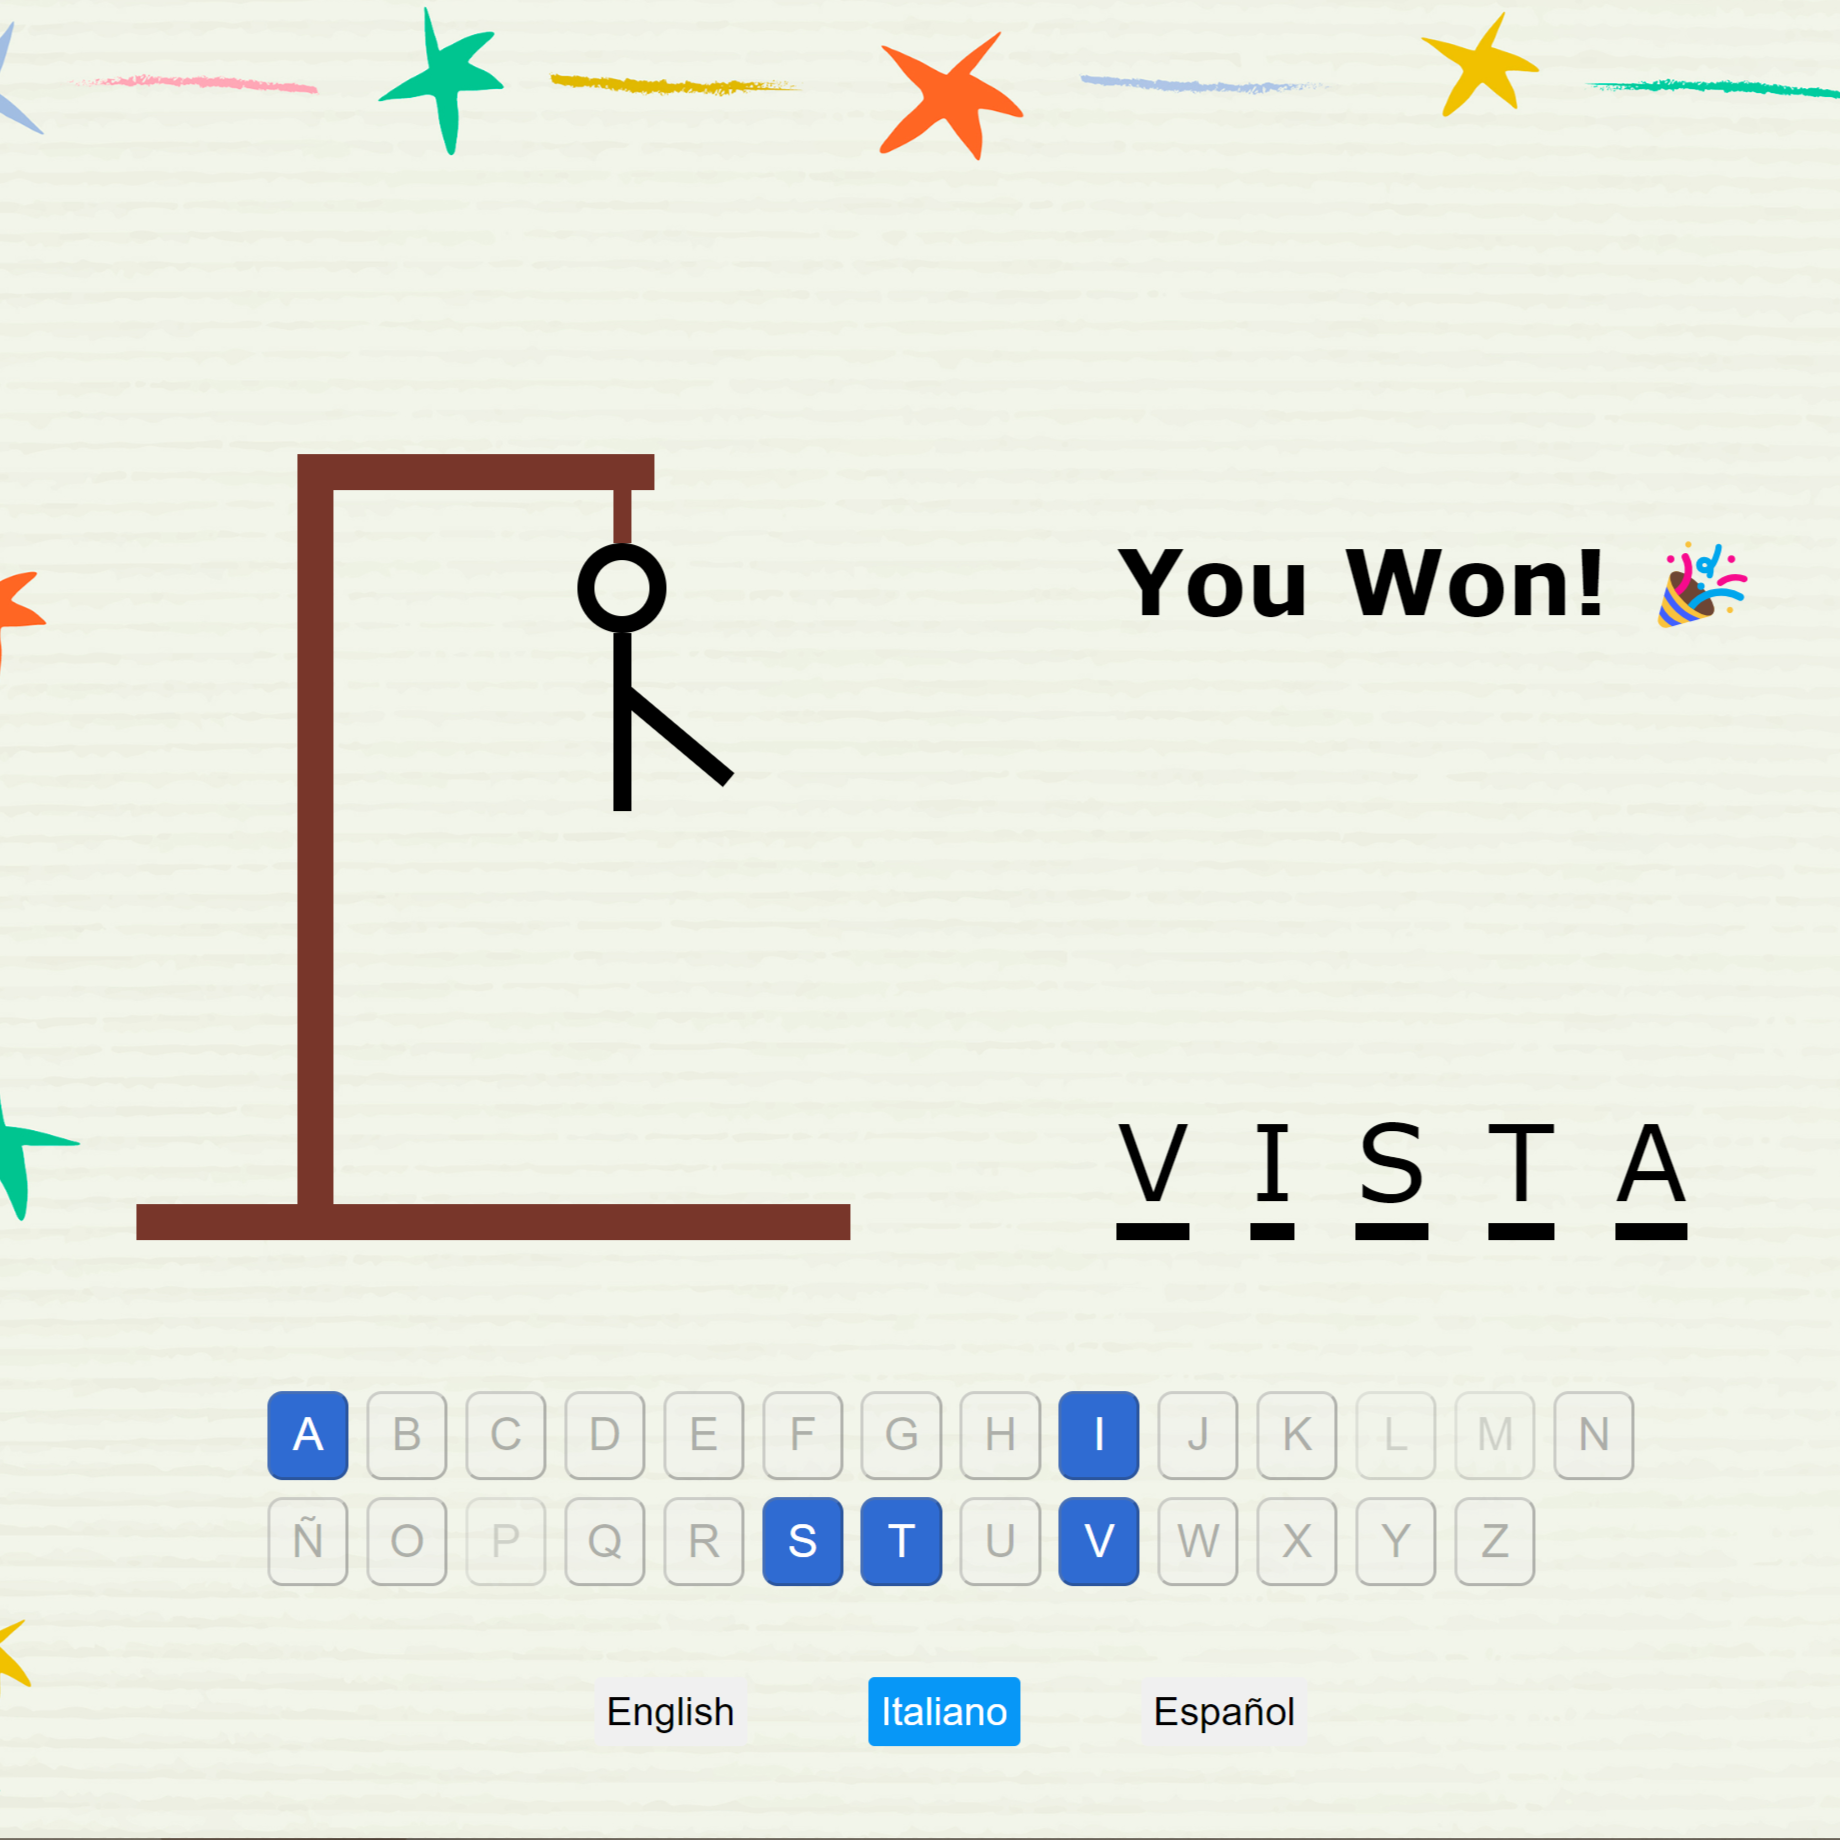 Hangman game, showing the game